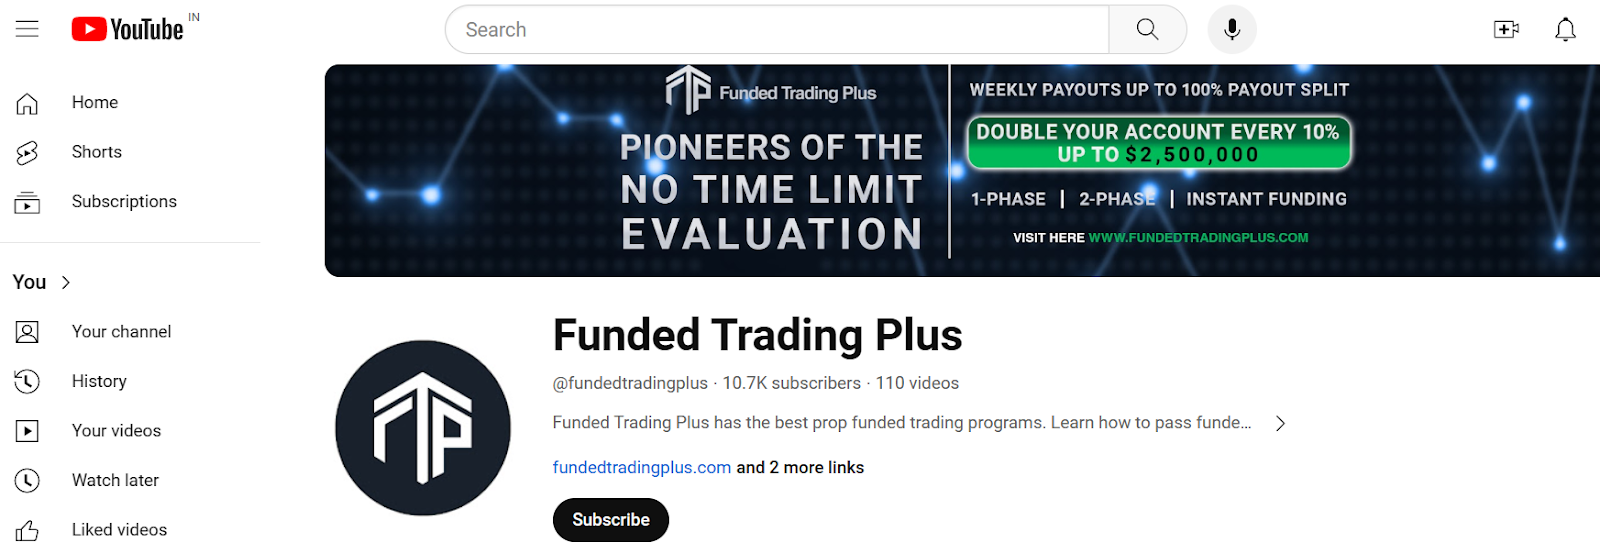 Funded Trading Plus YouTube